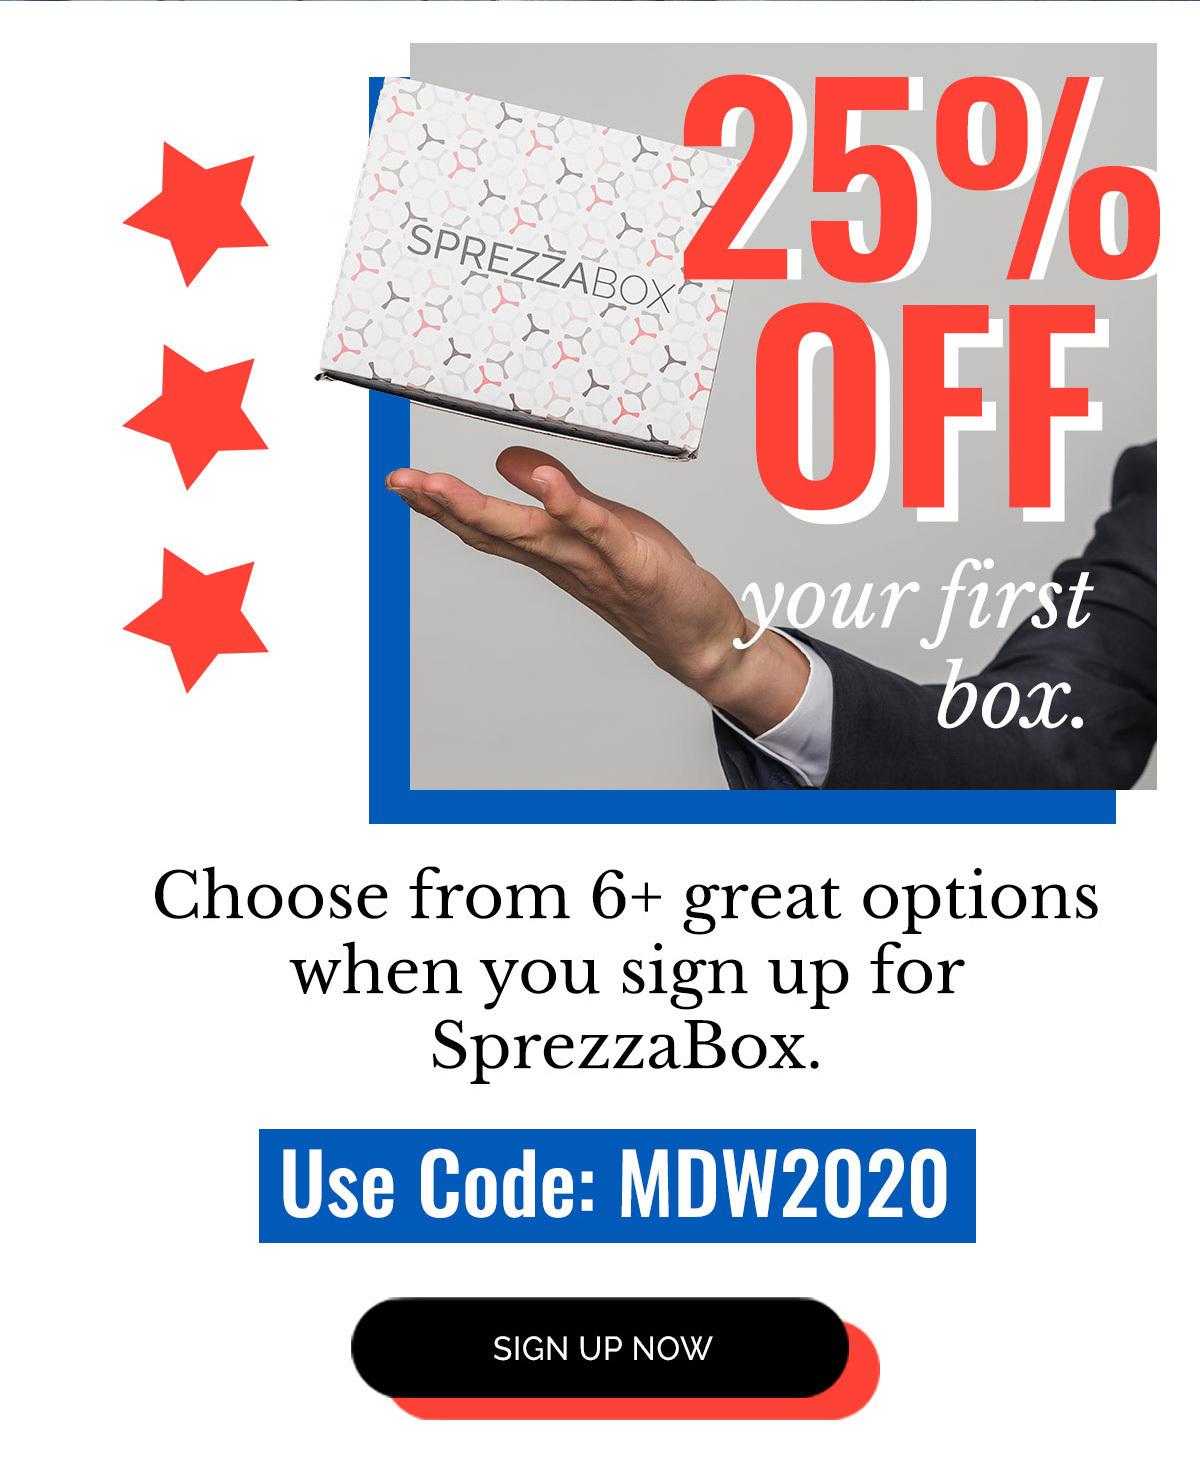 SprezzaBox Memorial Day Sale – Save 25%!